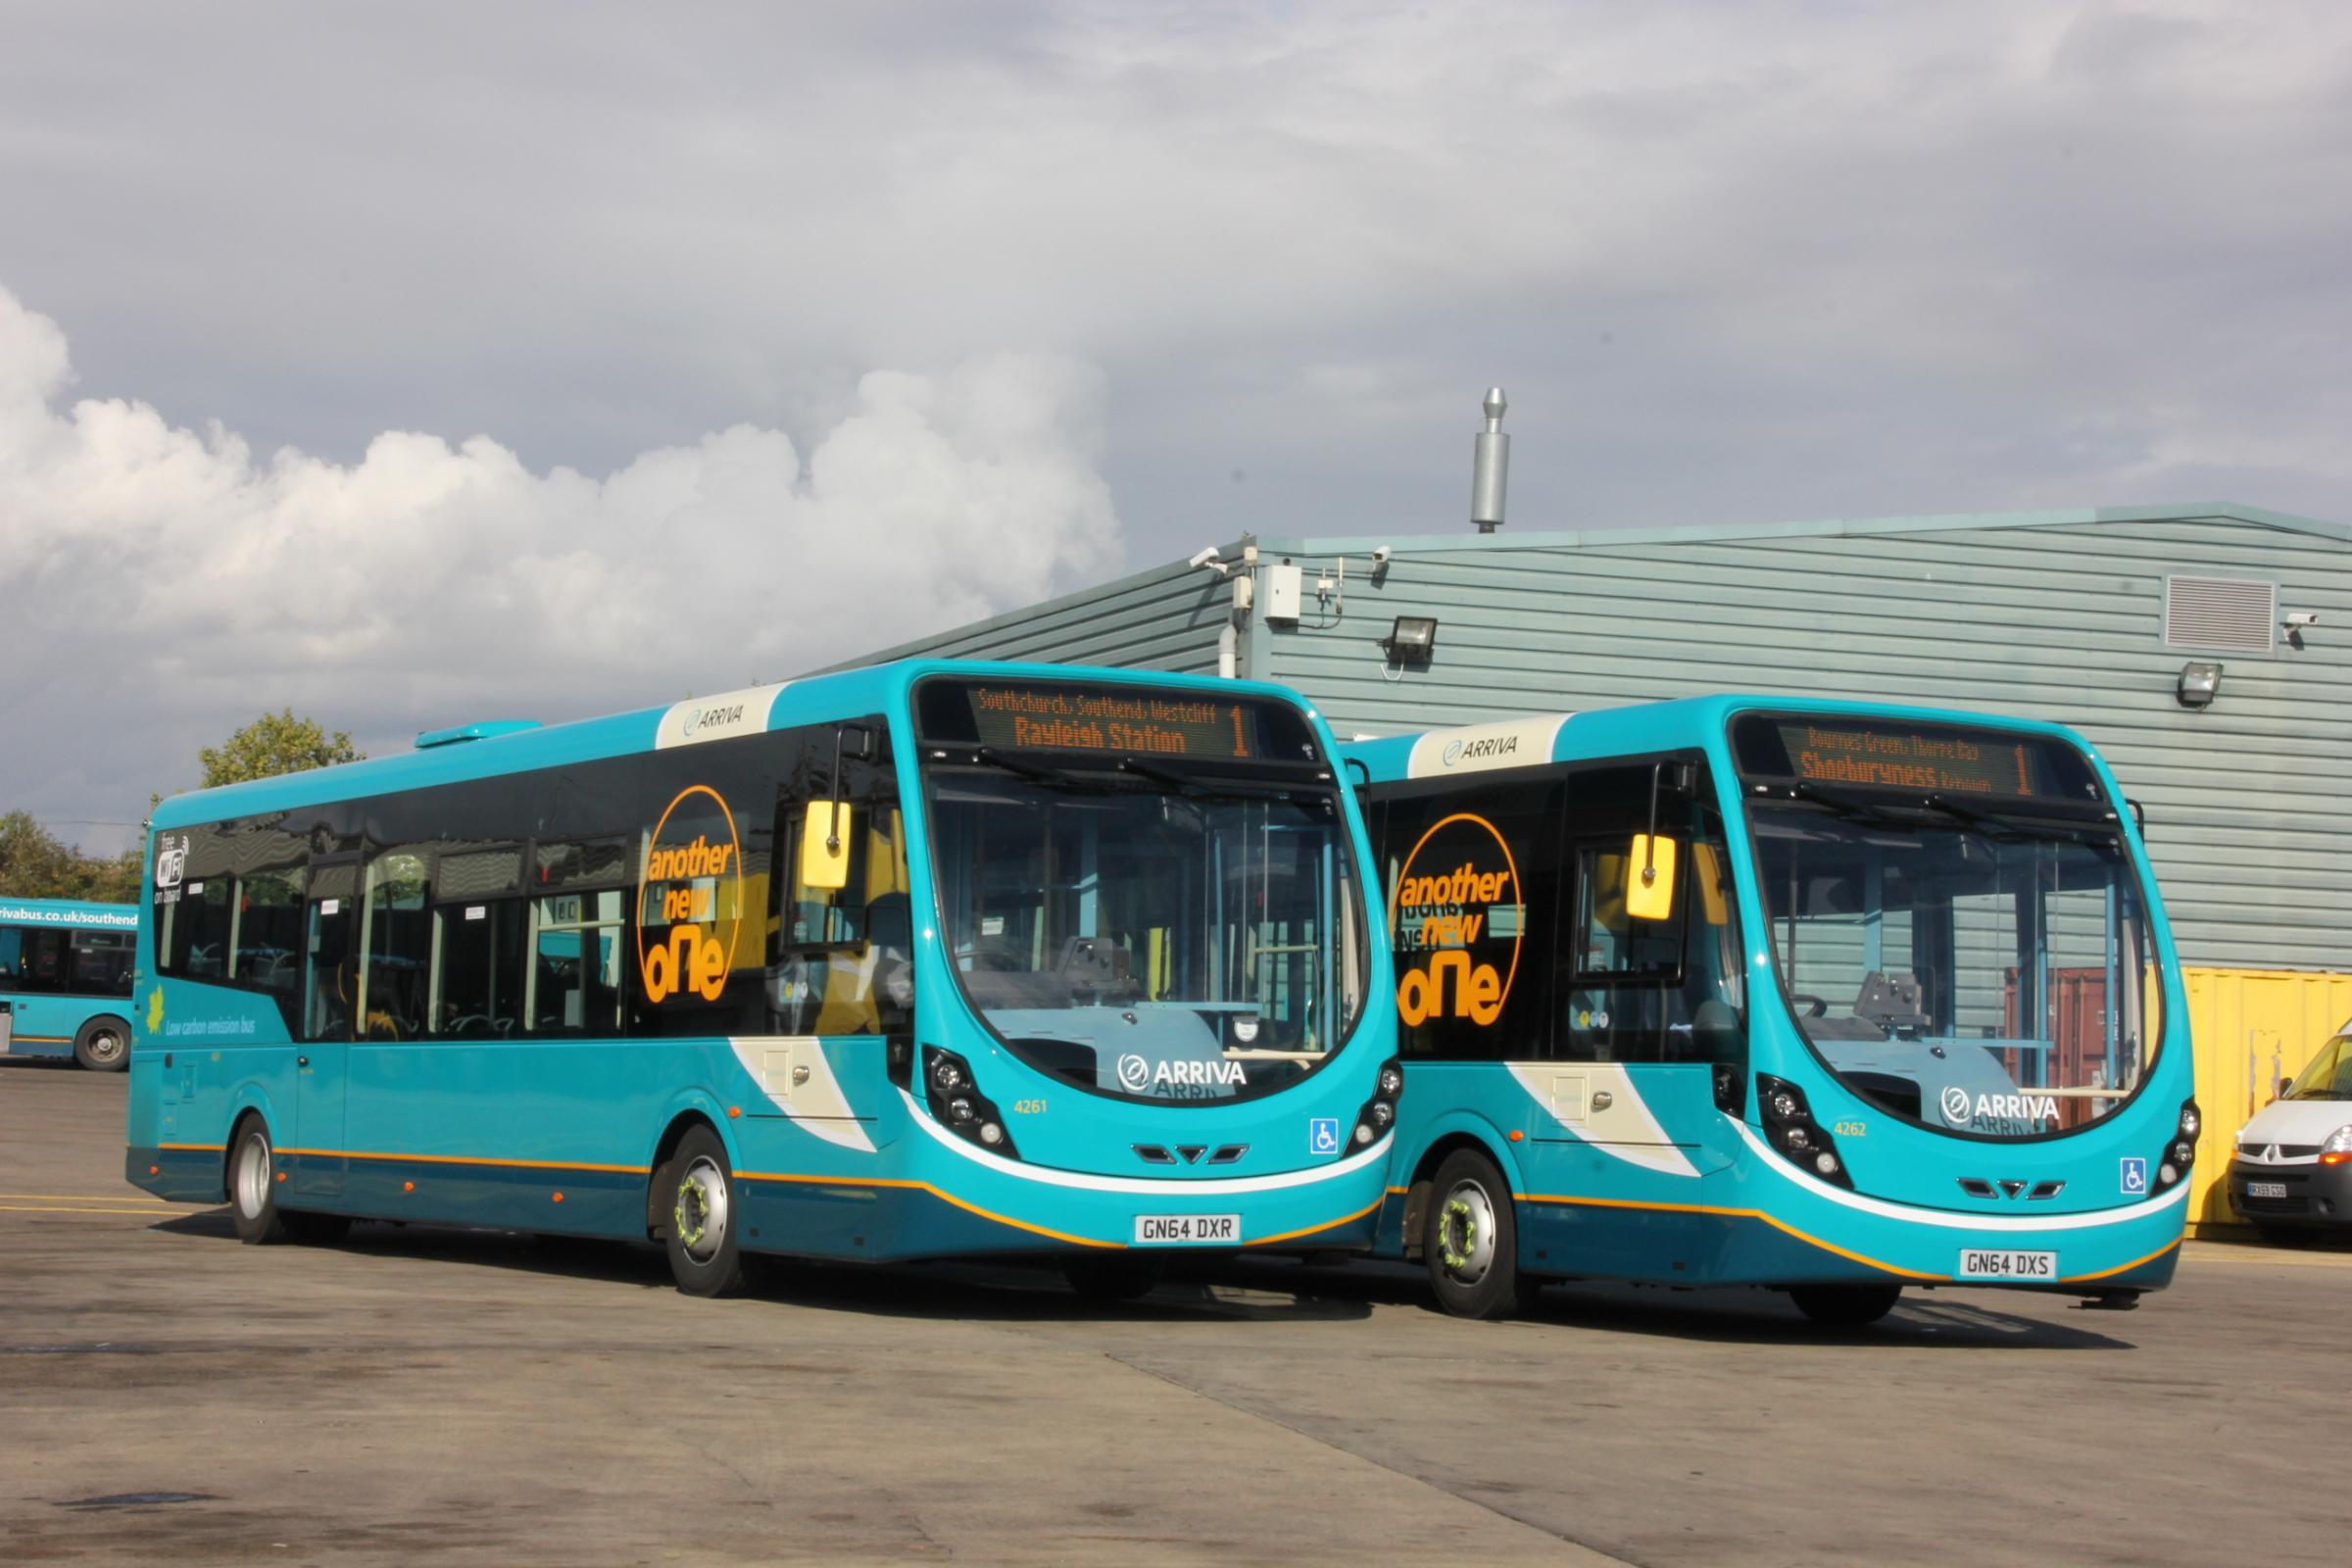 Free bus travel is up for grabs - Bradford news - NewsLocker.